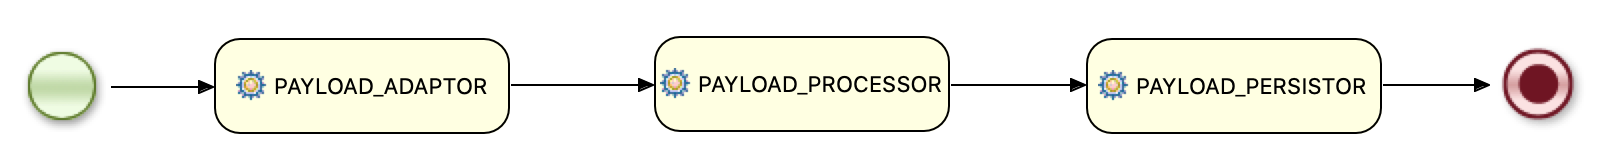 mtitek-process-app-payloadflow.bpmn